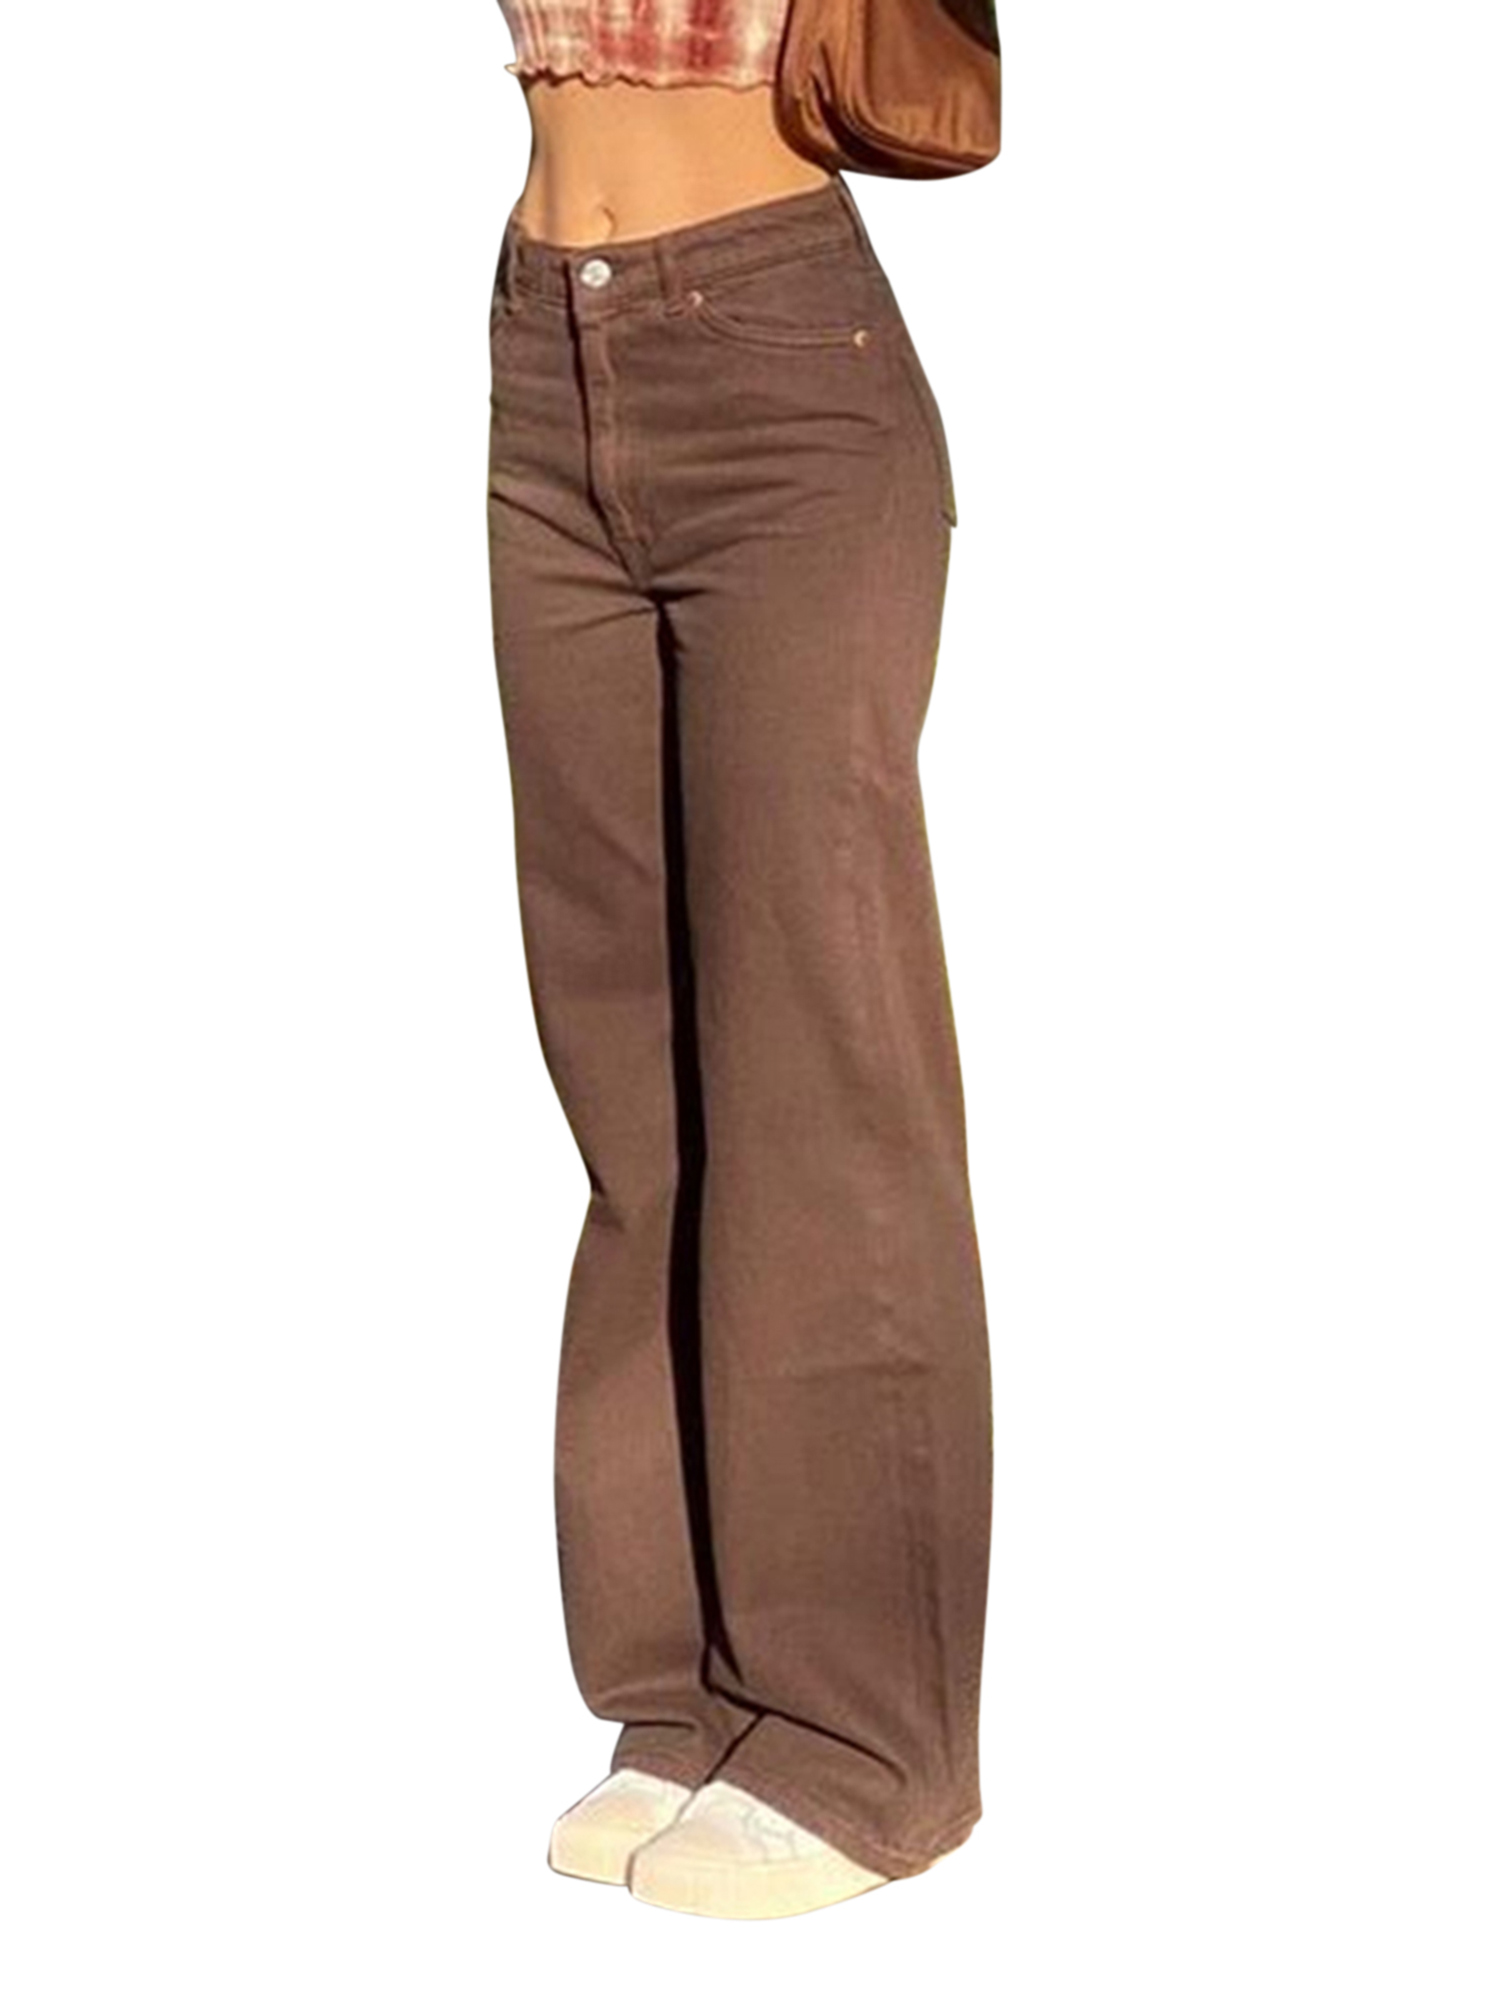 luethbiezx Women 's Y2K Straight Leg Trousers High Waist Denim Jeans Loose Baggy Flare Pencil Jeans Vintage E-Girl Streetwear Pants - image 2 of 6